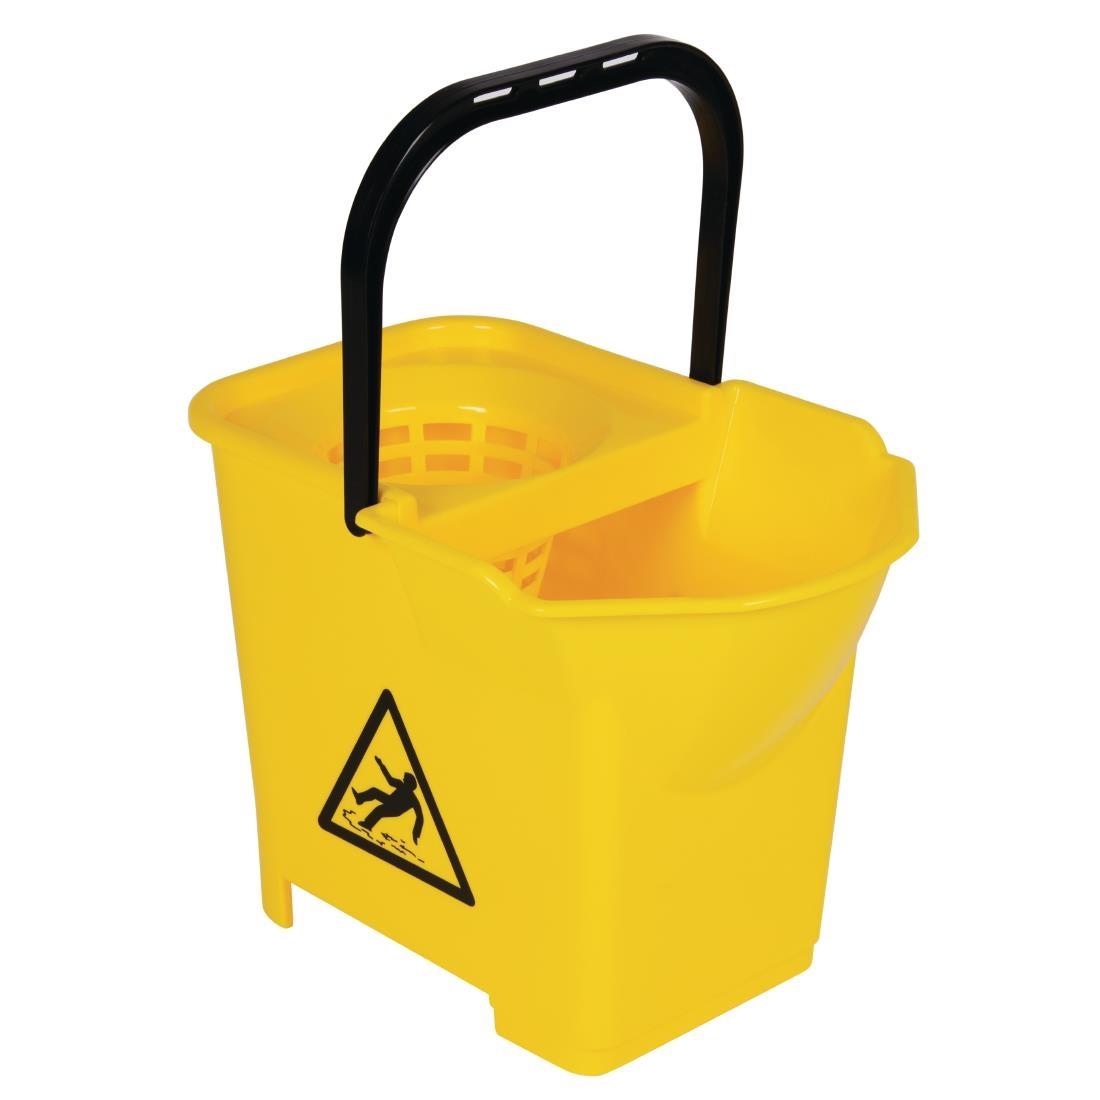 Jantex Colour Coded Mop Bucket Yellow - S223  - 1